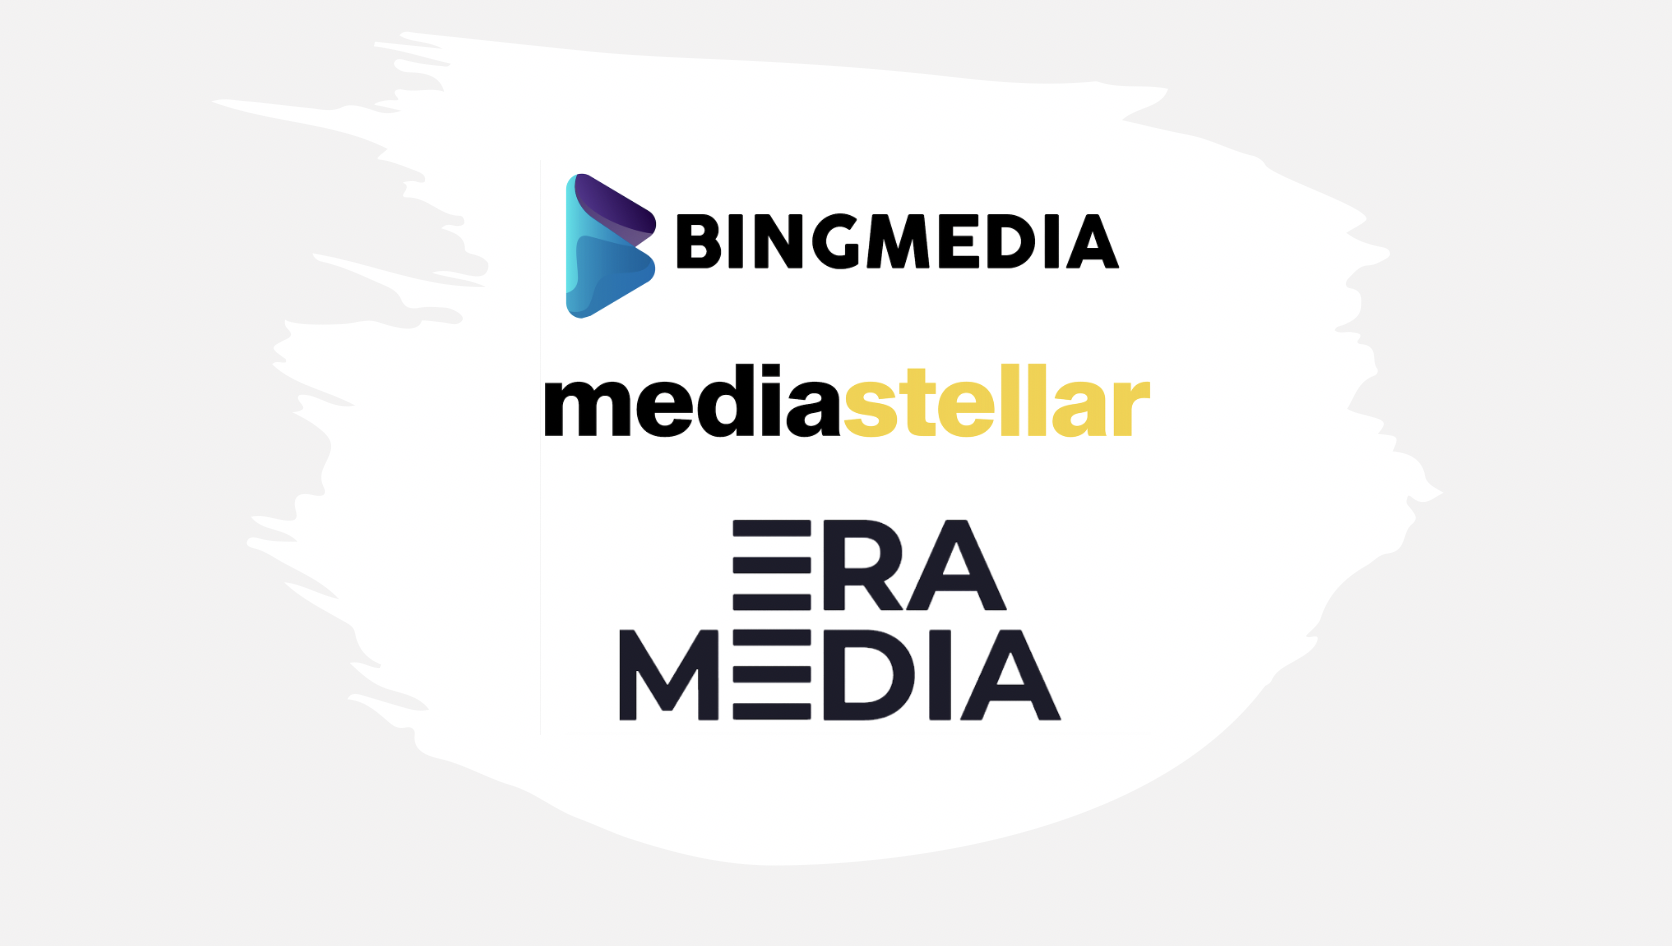 Partnership with media stellar, bing media and era media